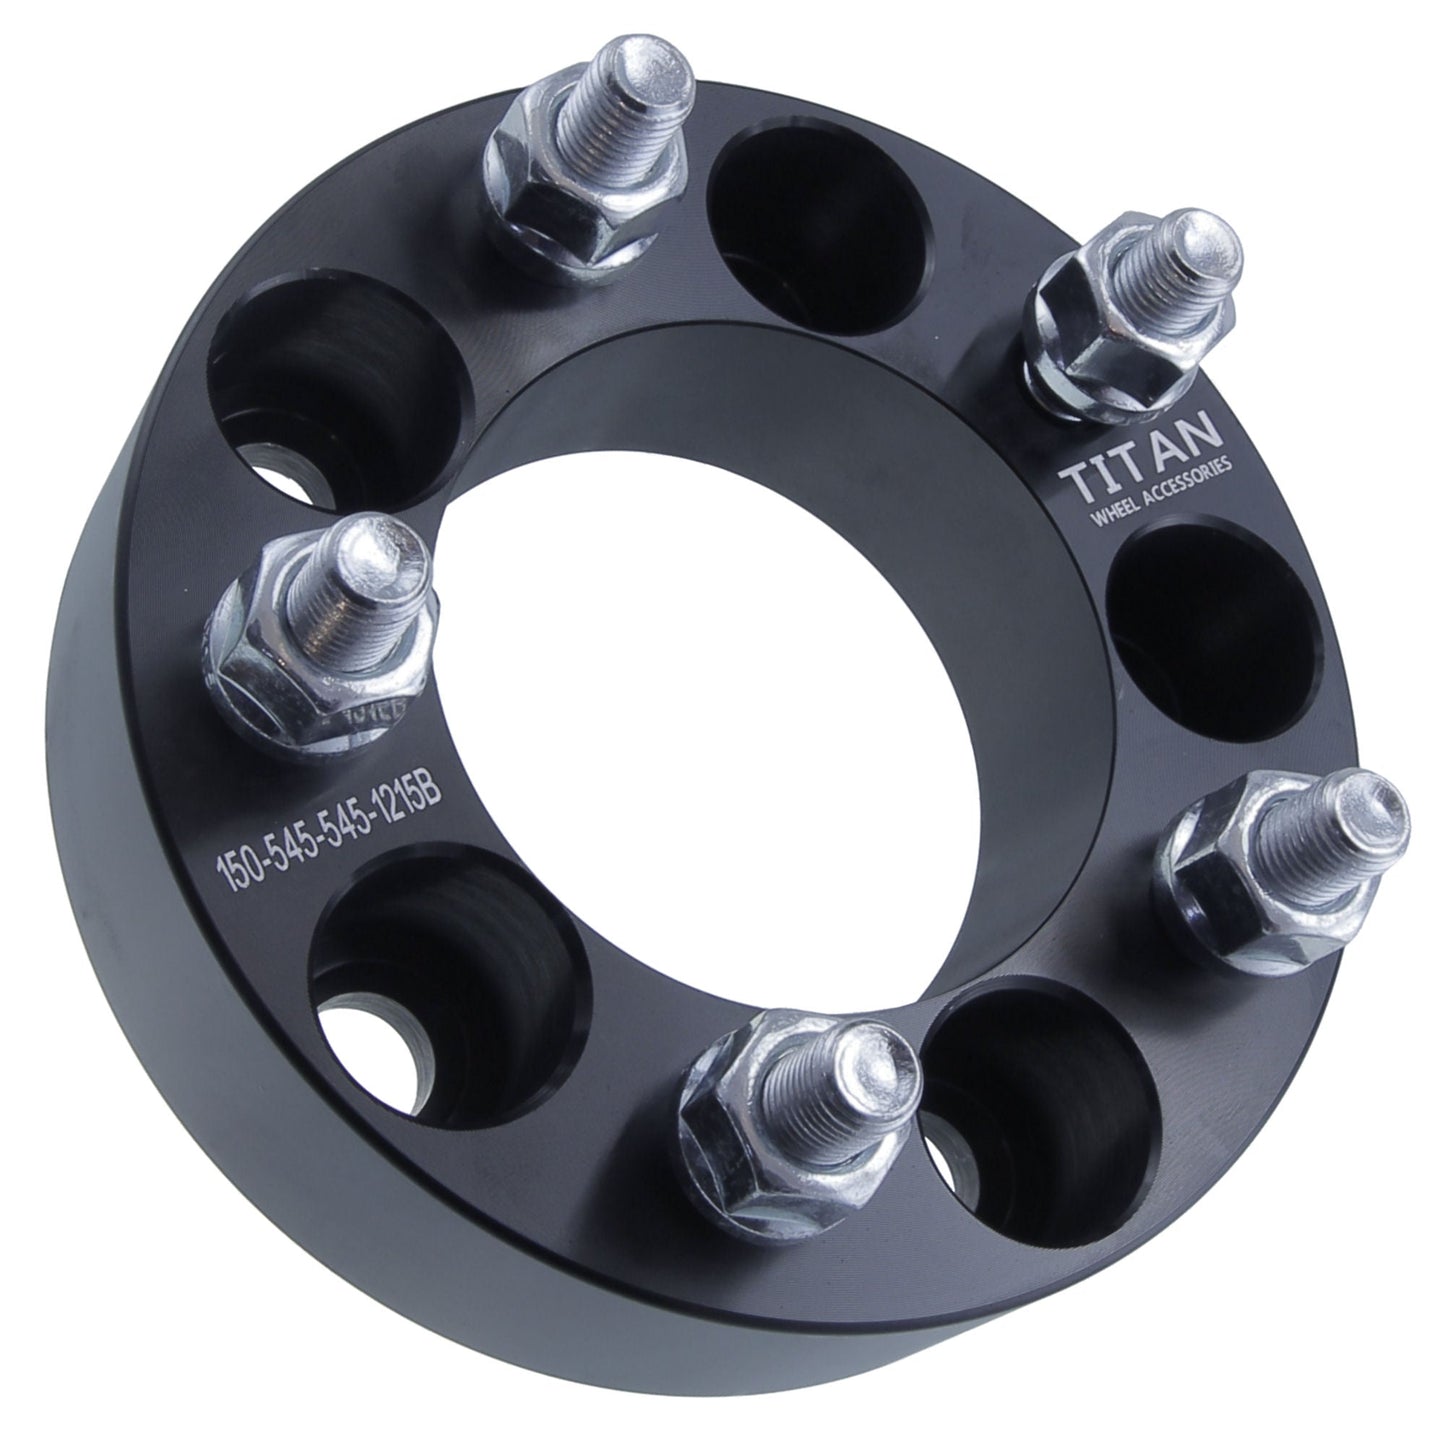 50mm (2") Titan Wheel Spacers | 5x114.3 | 12x1.5 Studs | Titan Wheel Accessories